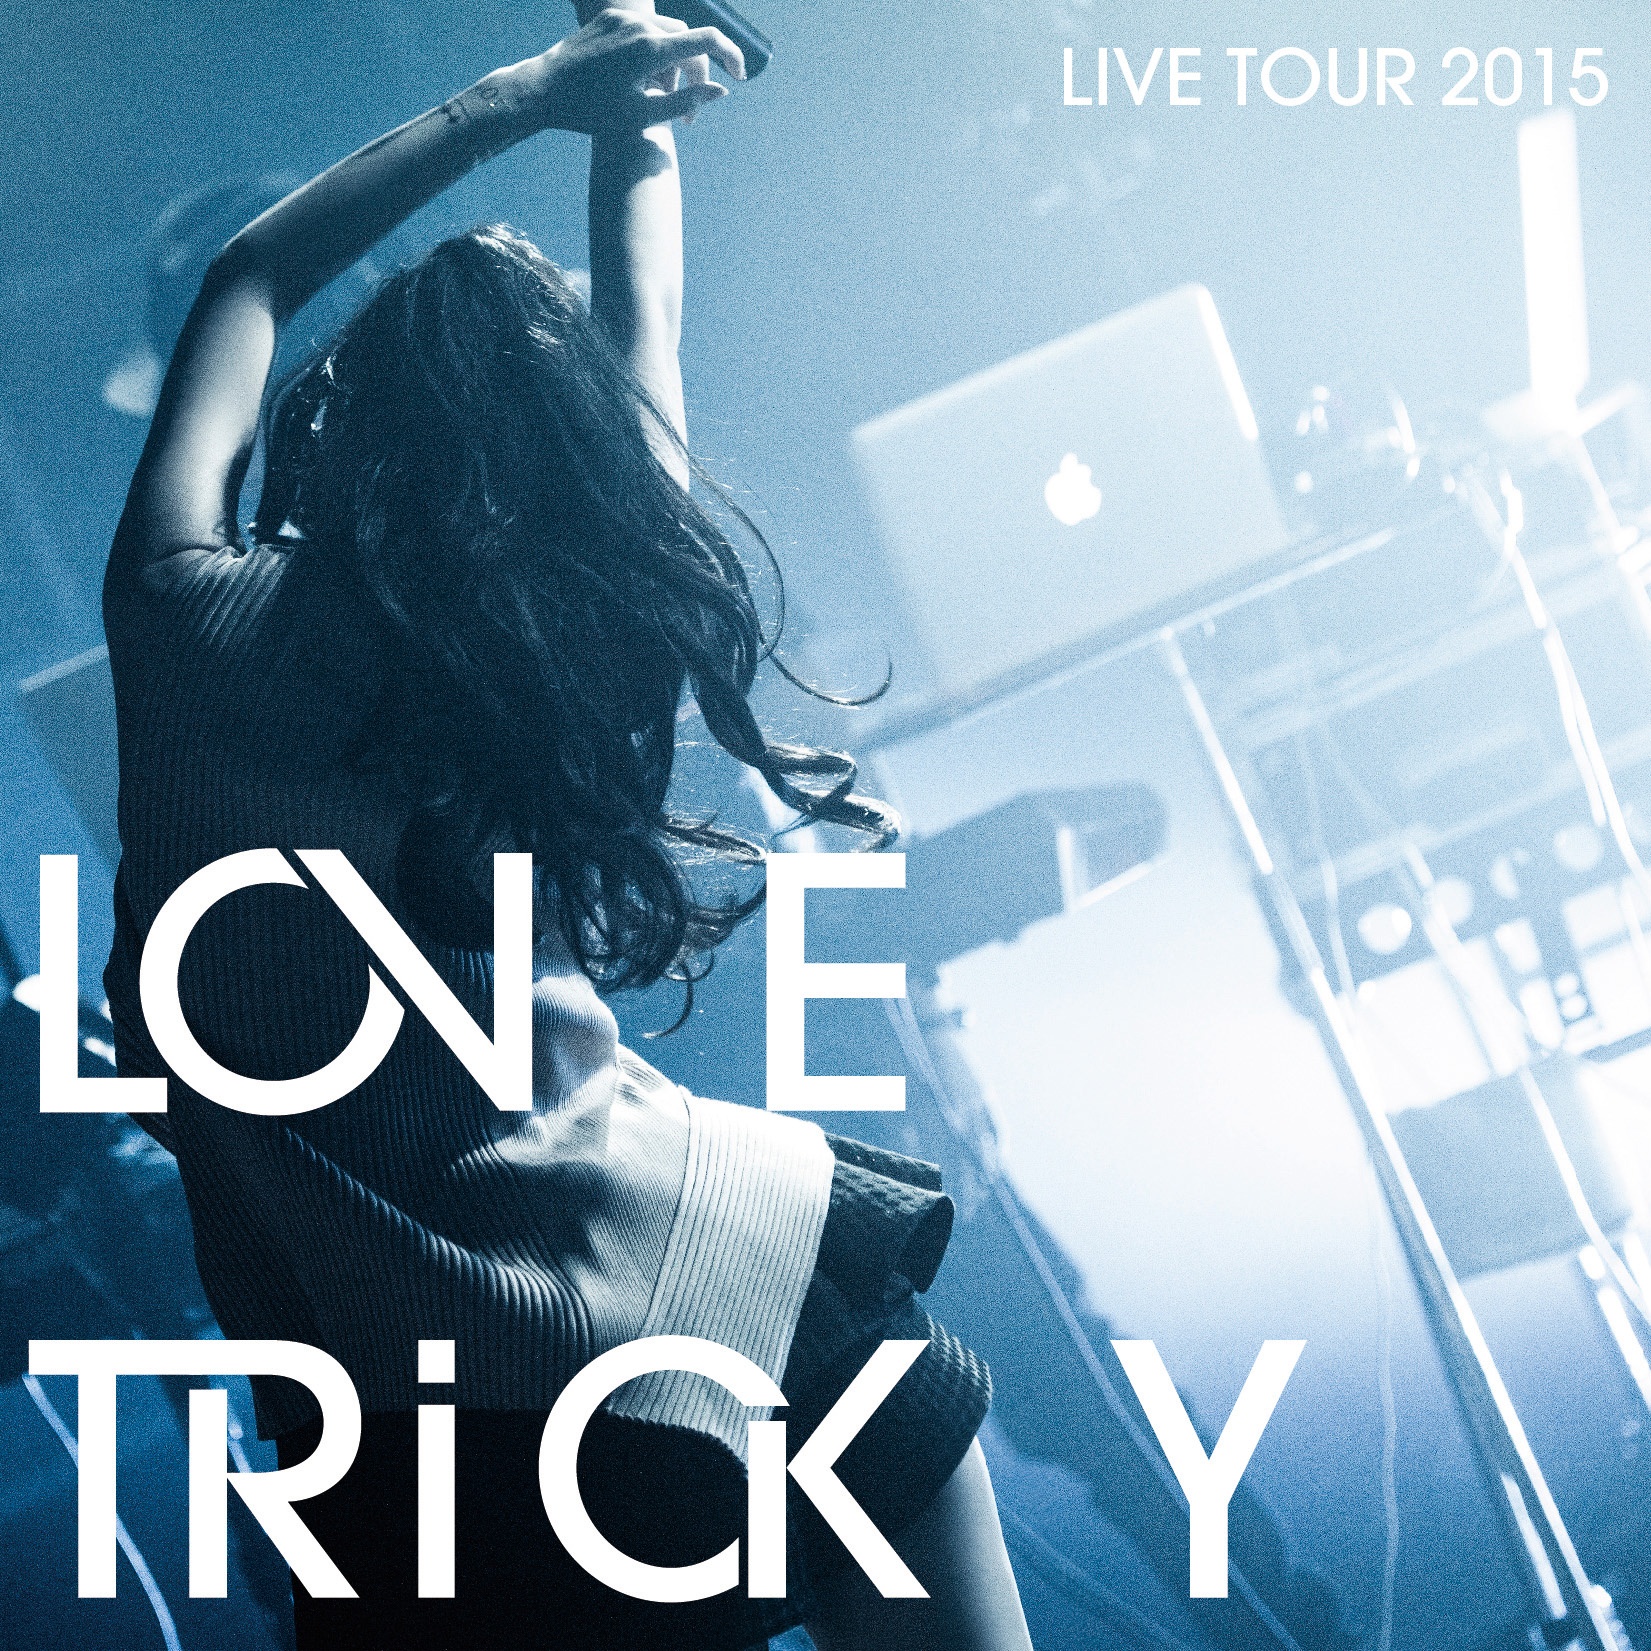 busy lady LOVE TRiCKY LIVE TOUR 2015 ti zhong jian